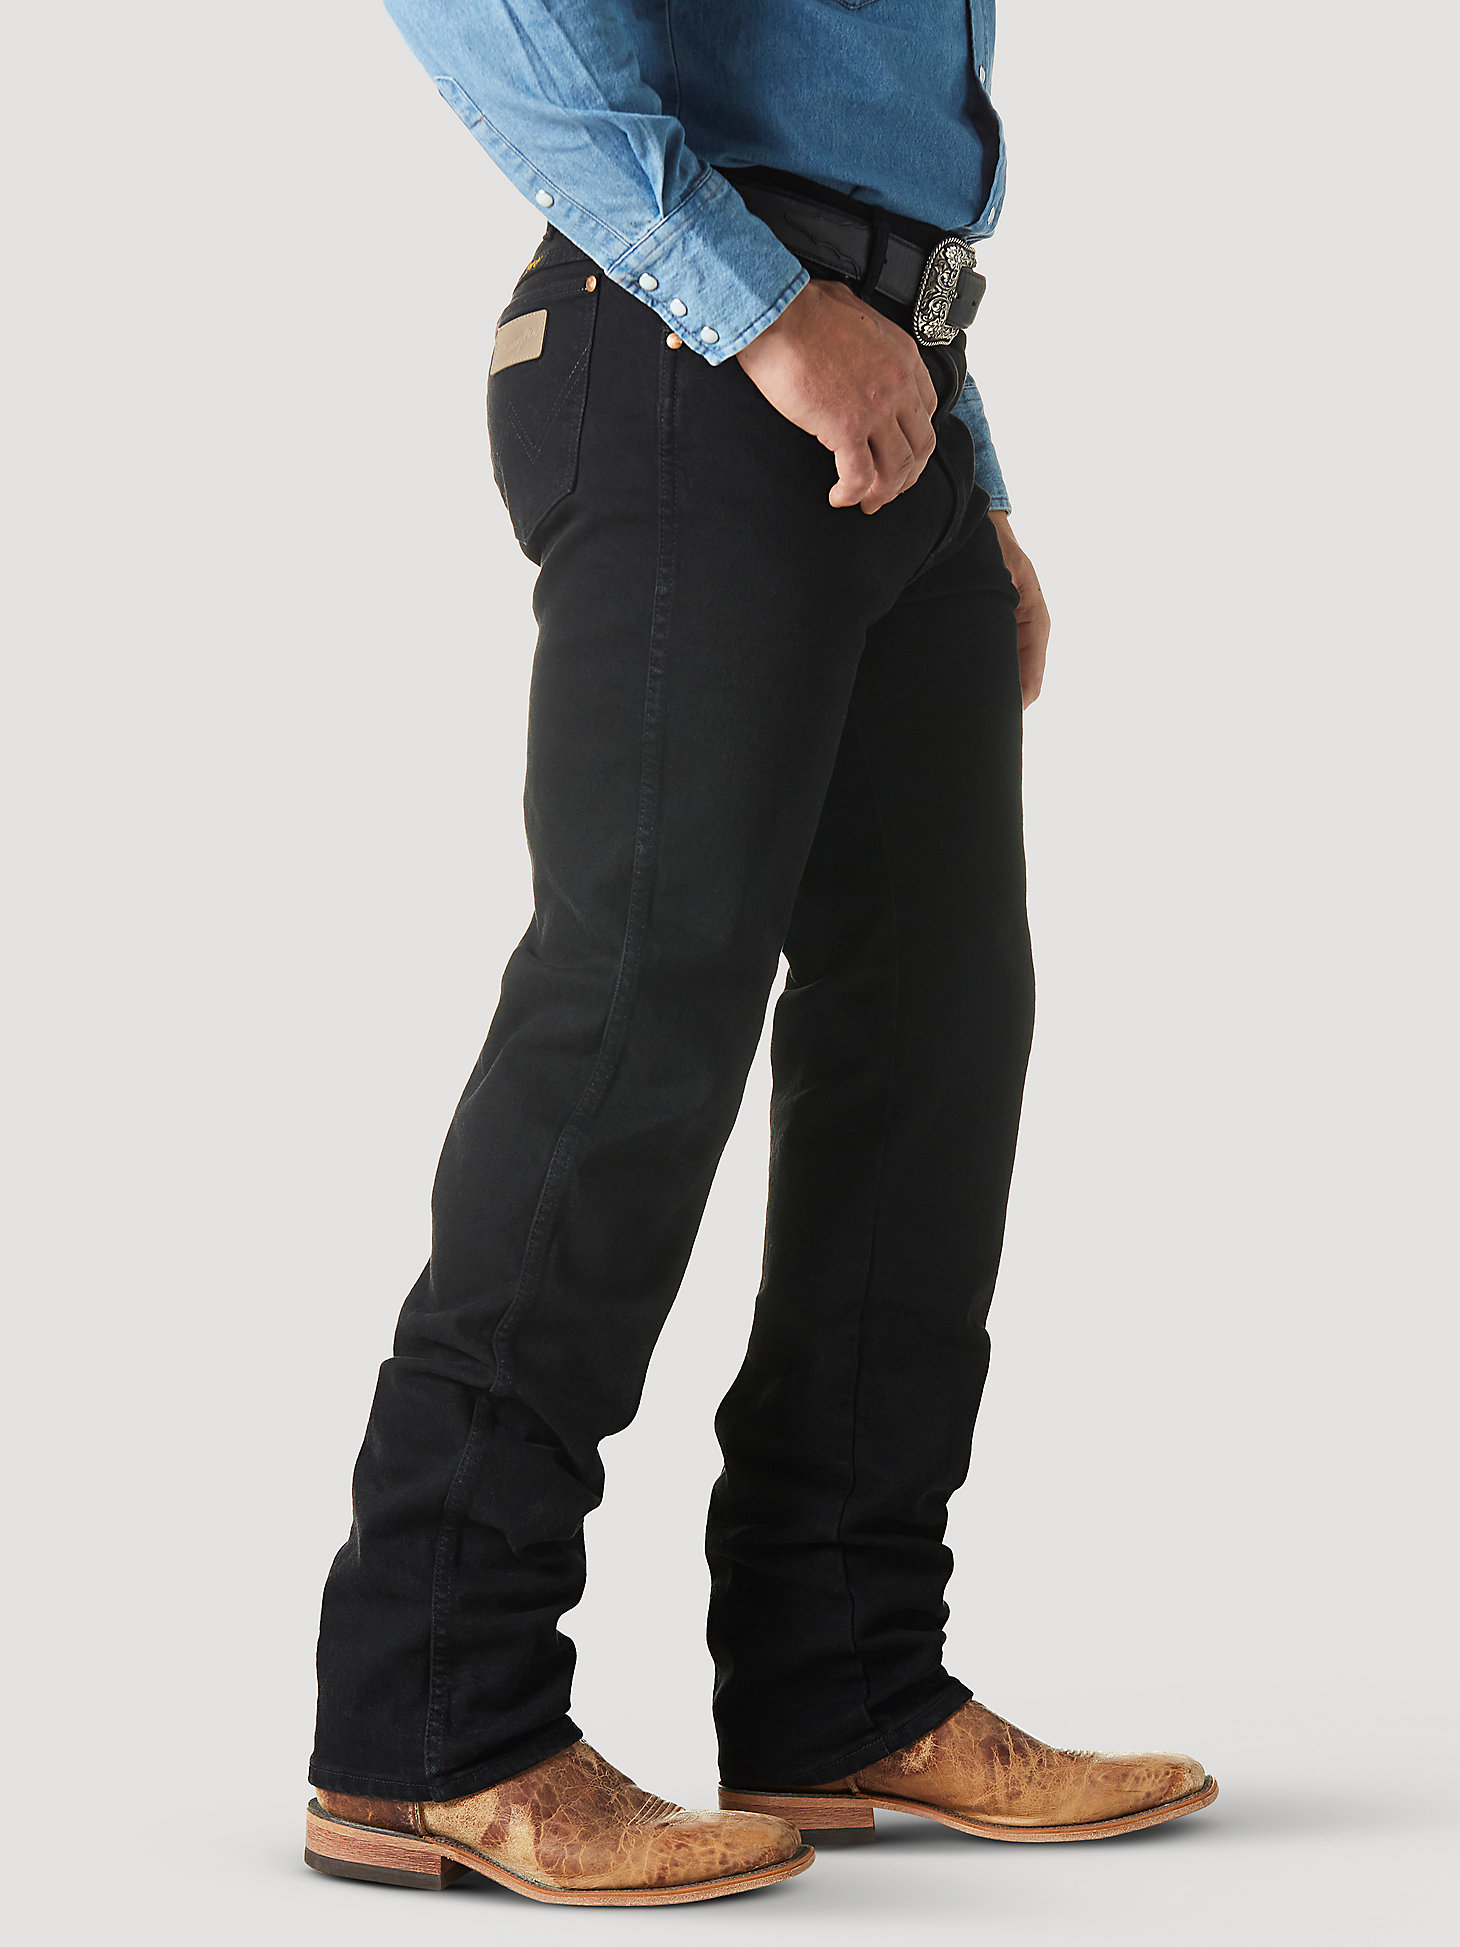 Wrangler® Cowboy Cut® Original Fit Active Flex Jeans in Black alternative view 4